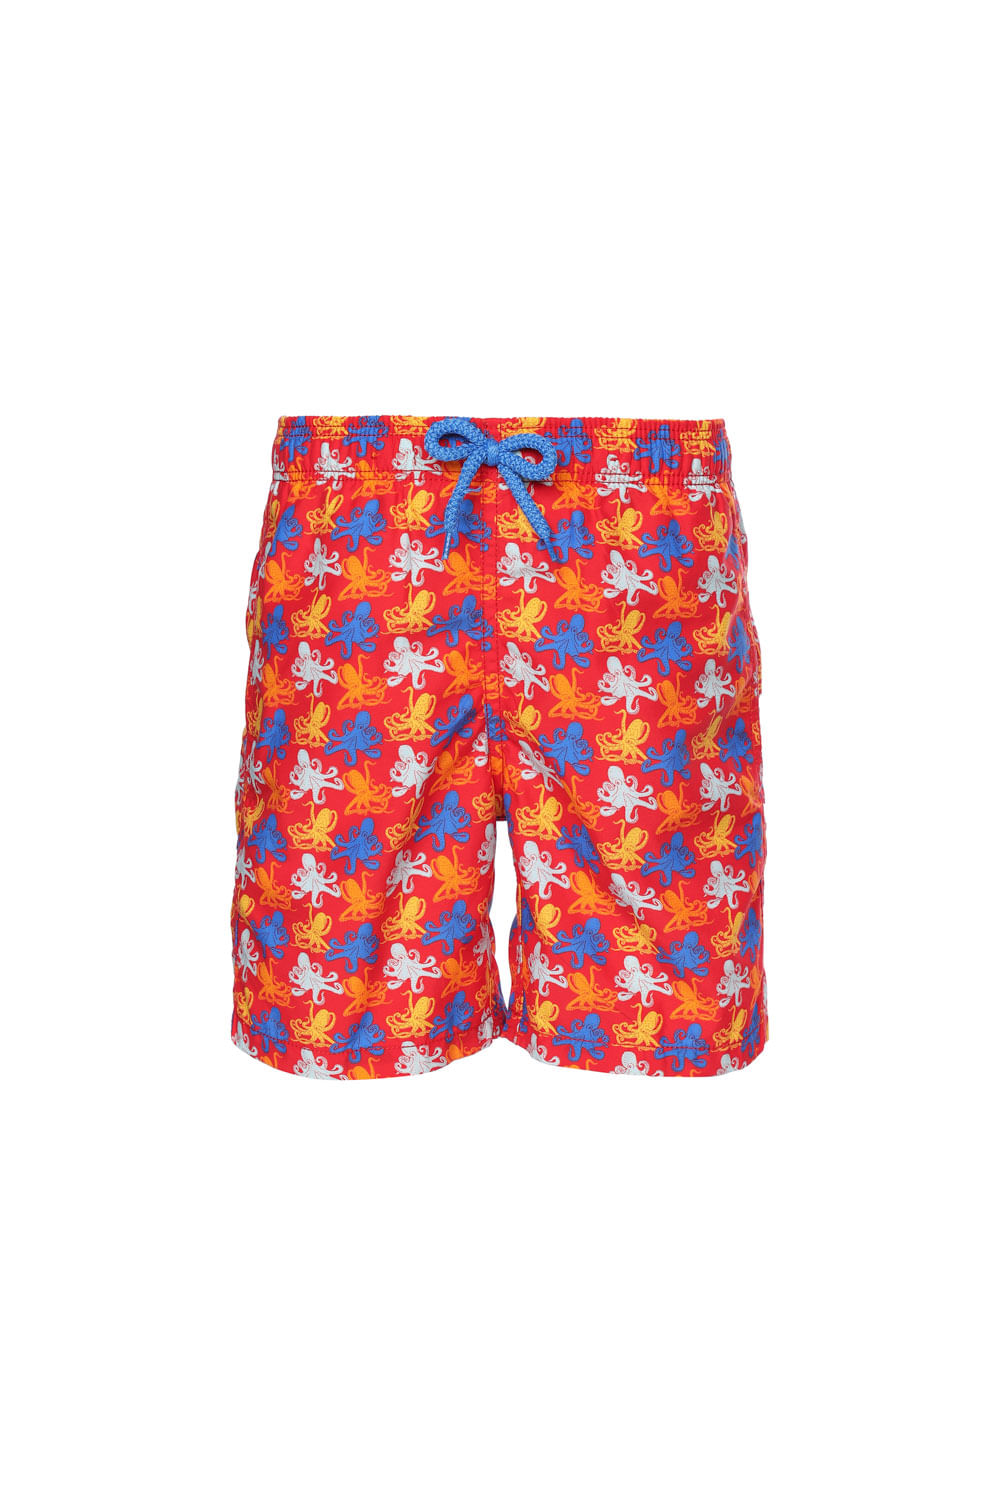 Vilebrequin Teen Boys Red Turtle Swim Shorts